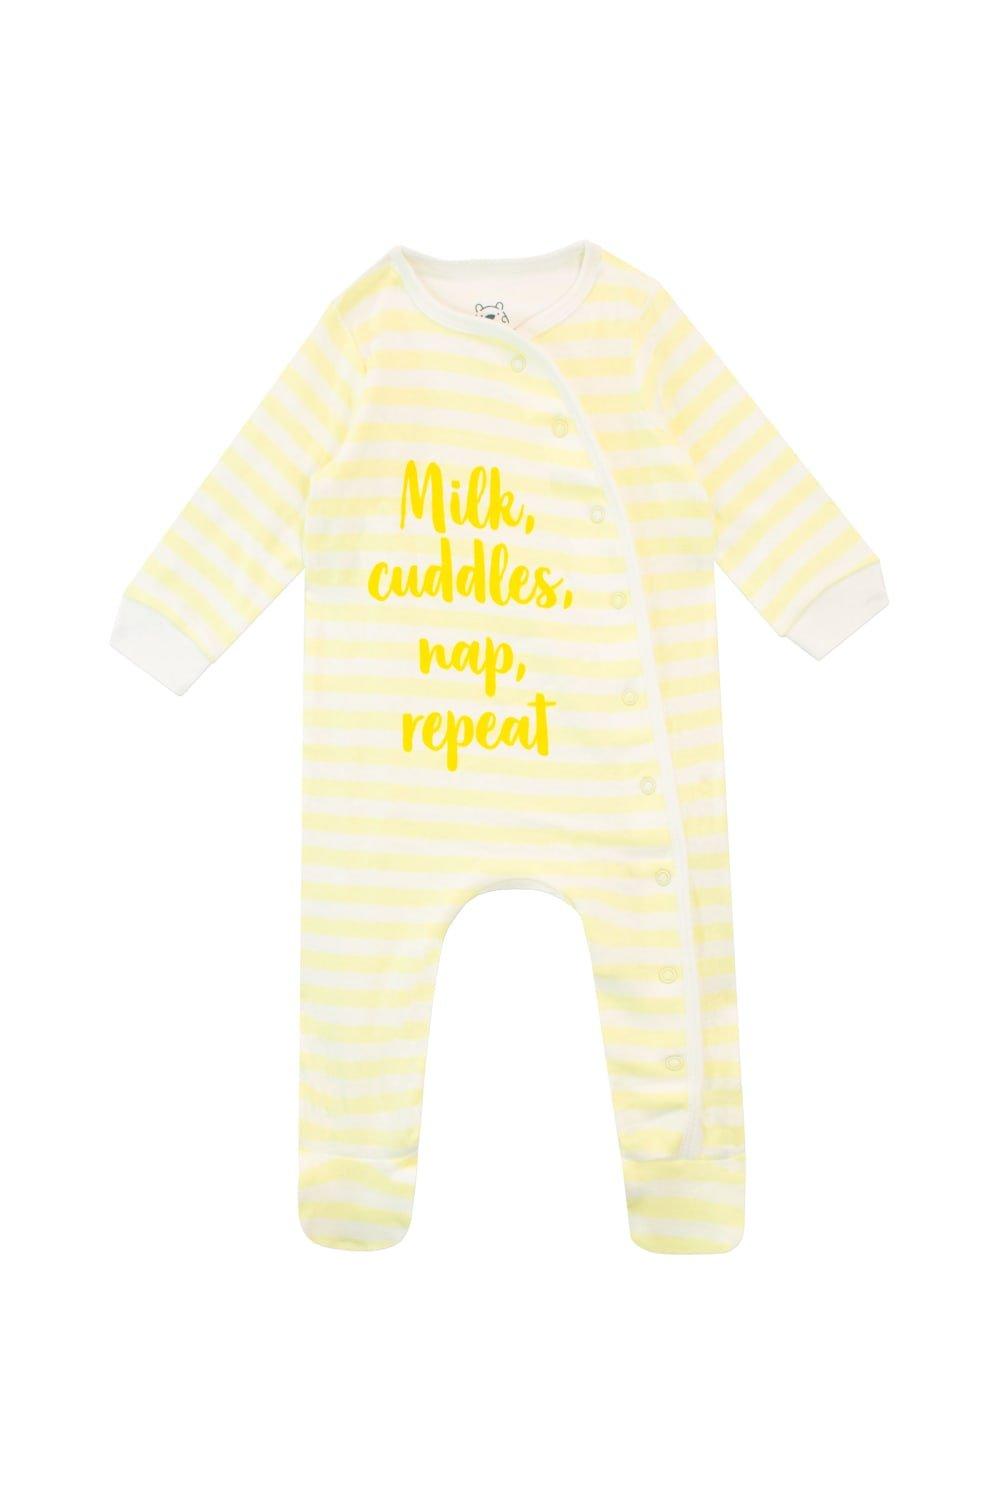 Baby Milk Cuddles Nap Повторный пижамный комбинезон Harry Bear, желтый